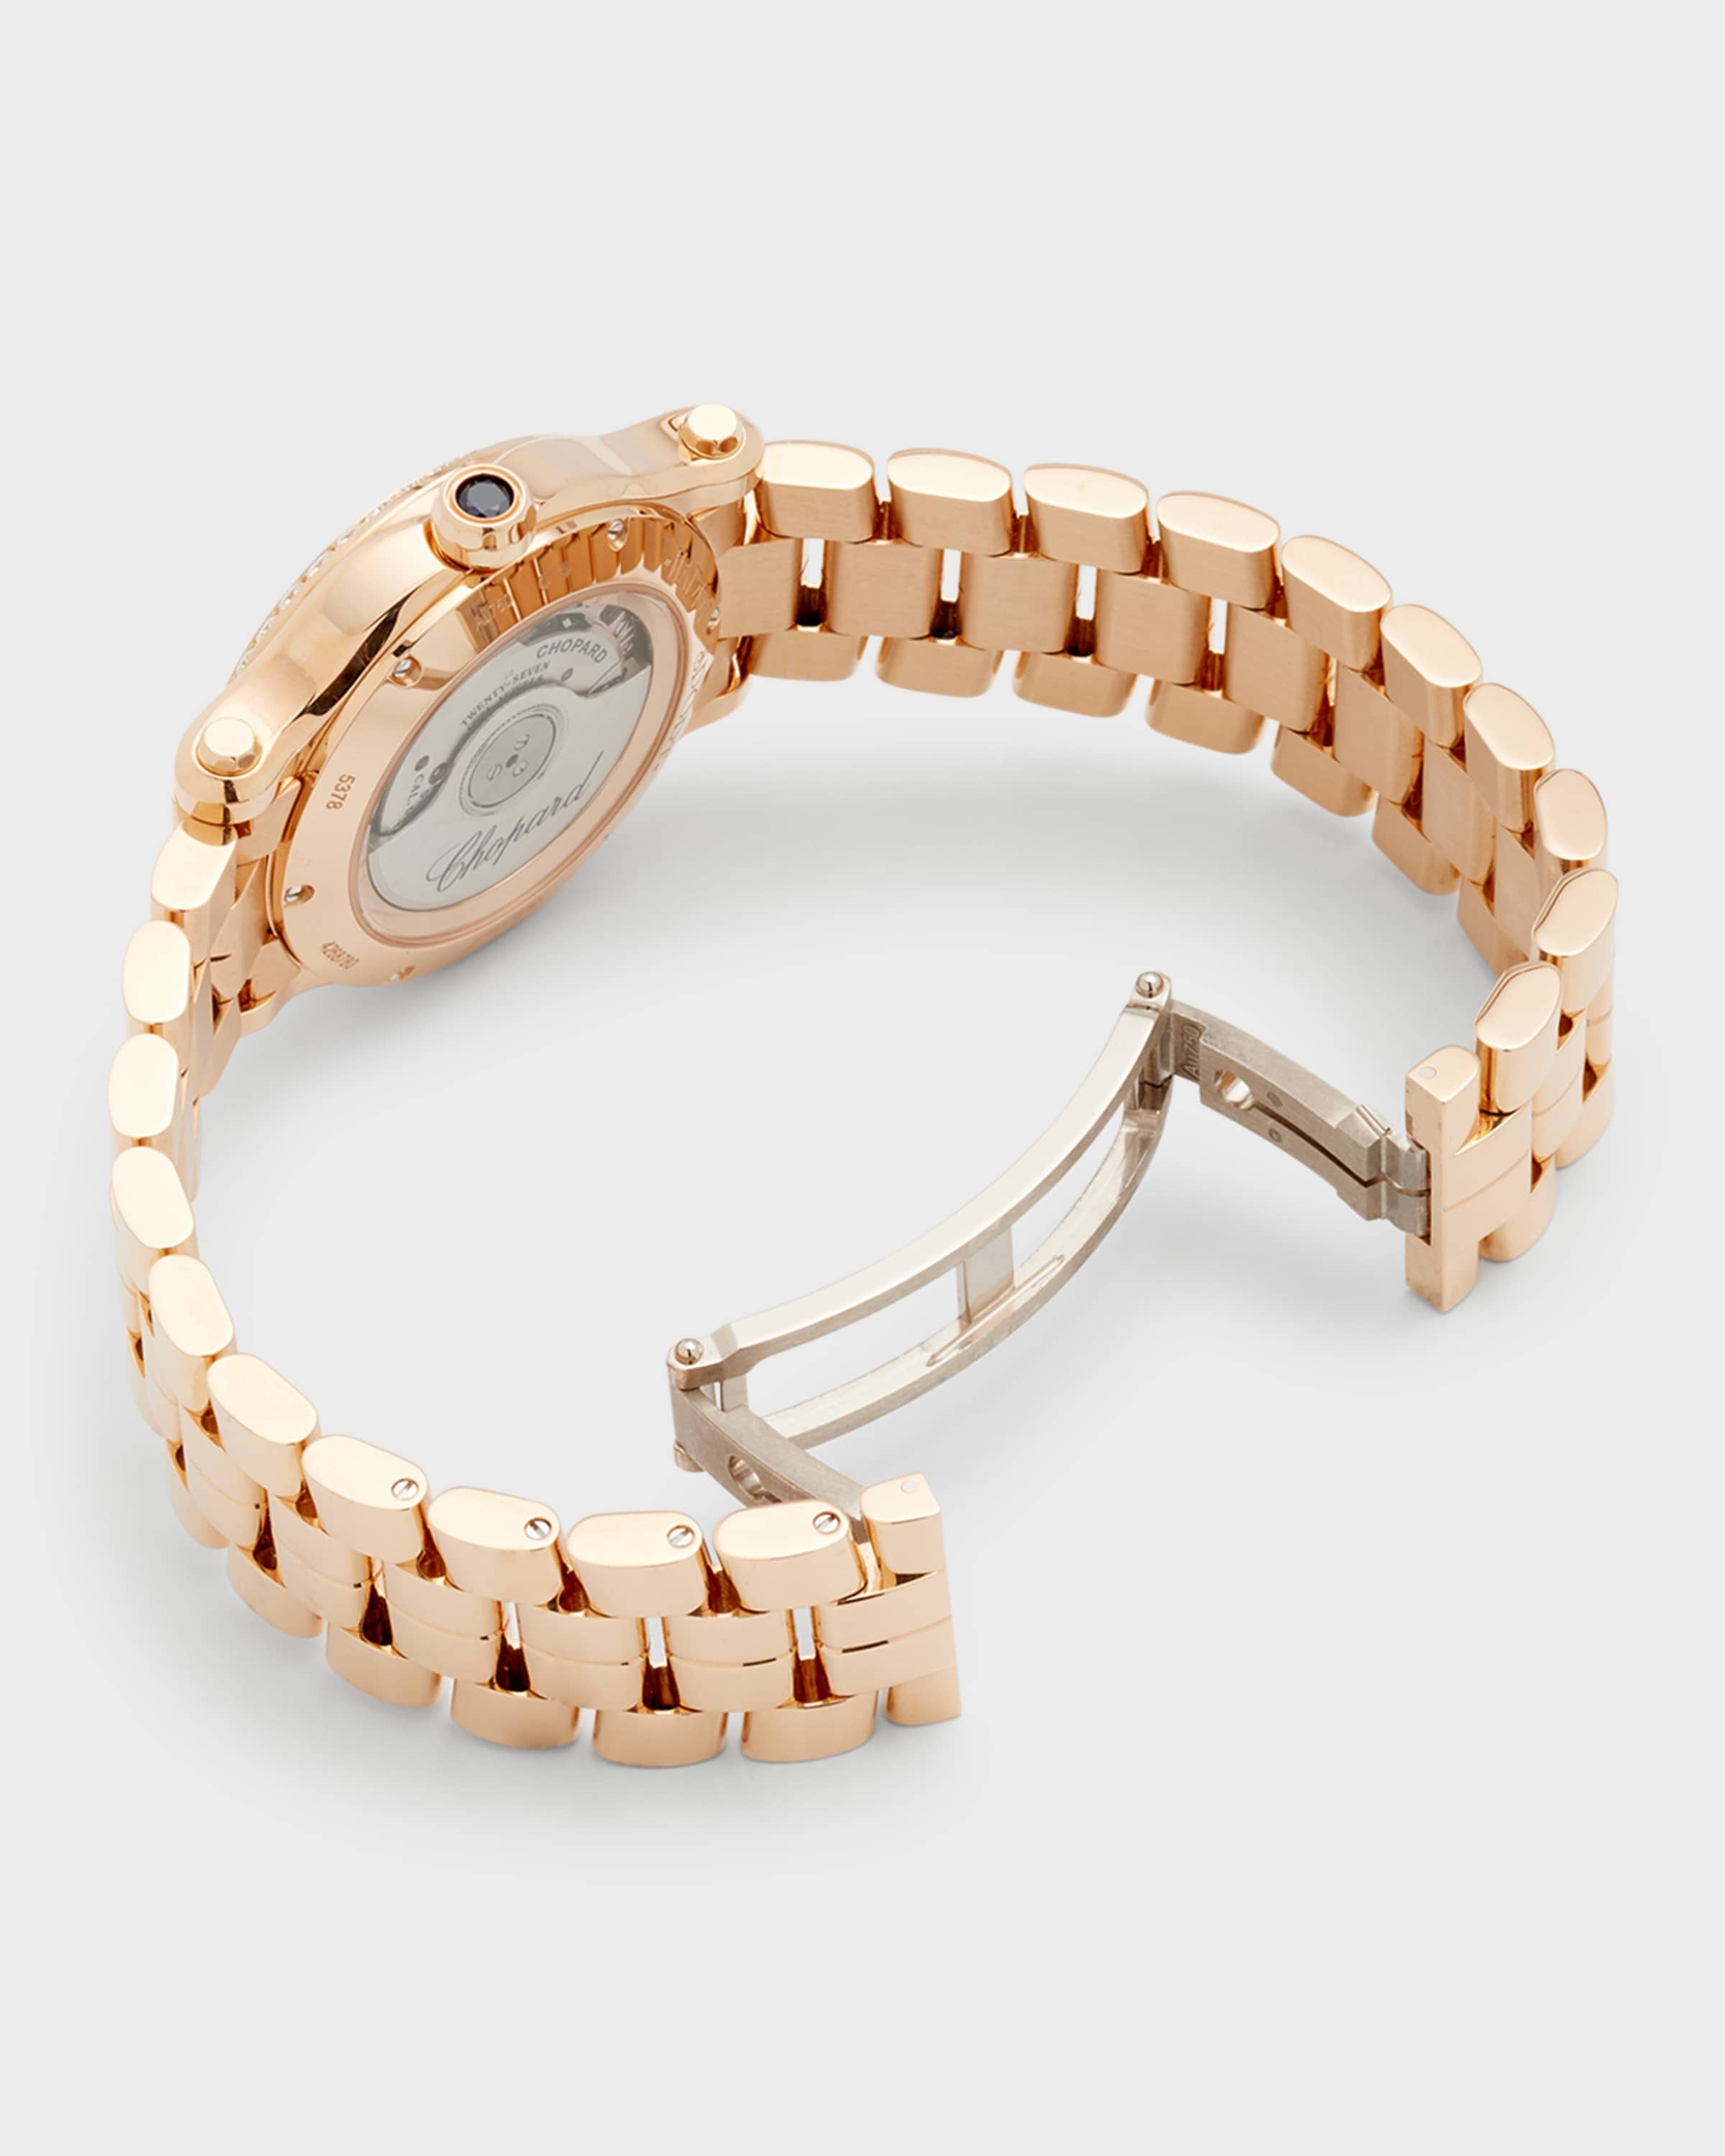 33mm Happy Sport Automatic Diamond Rose Gold Bracelet Watch - 3